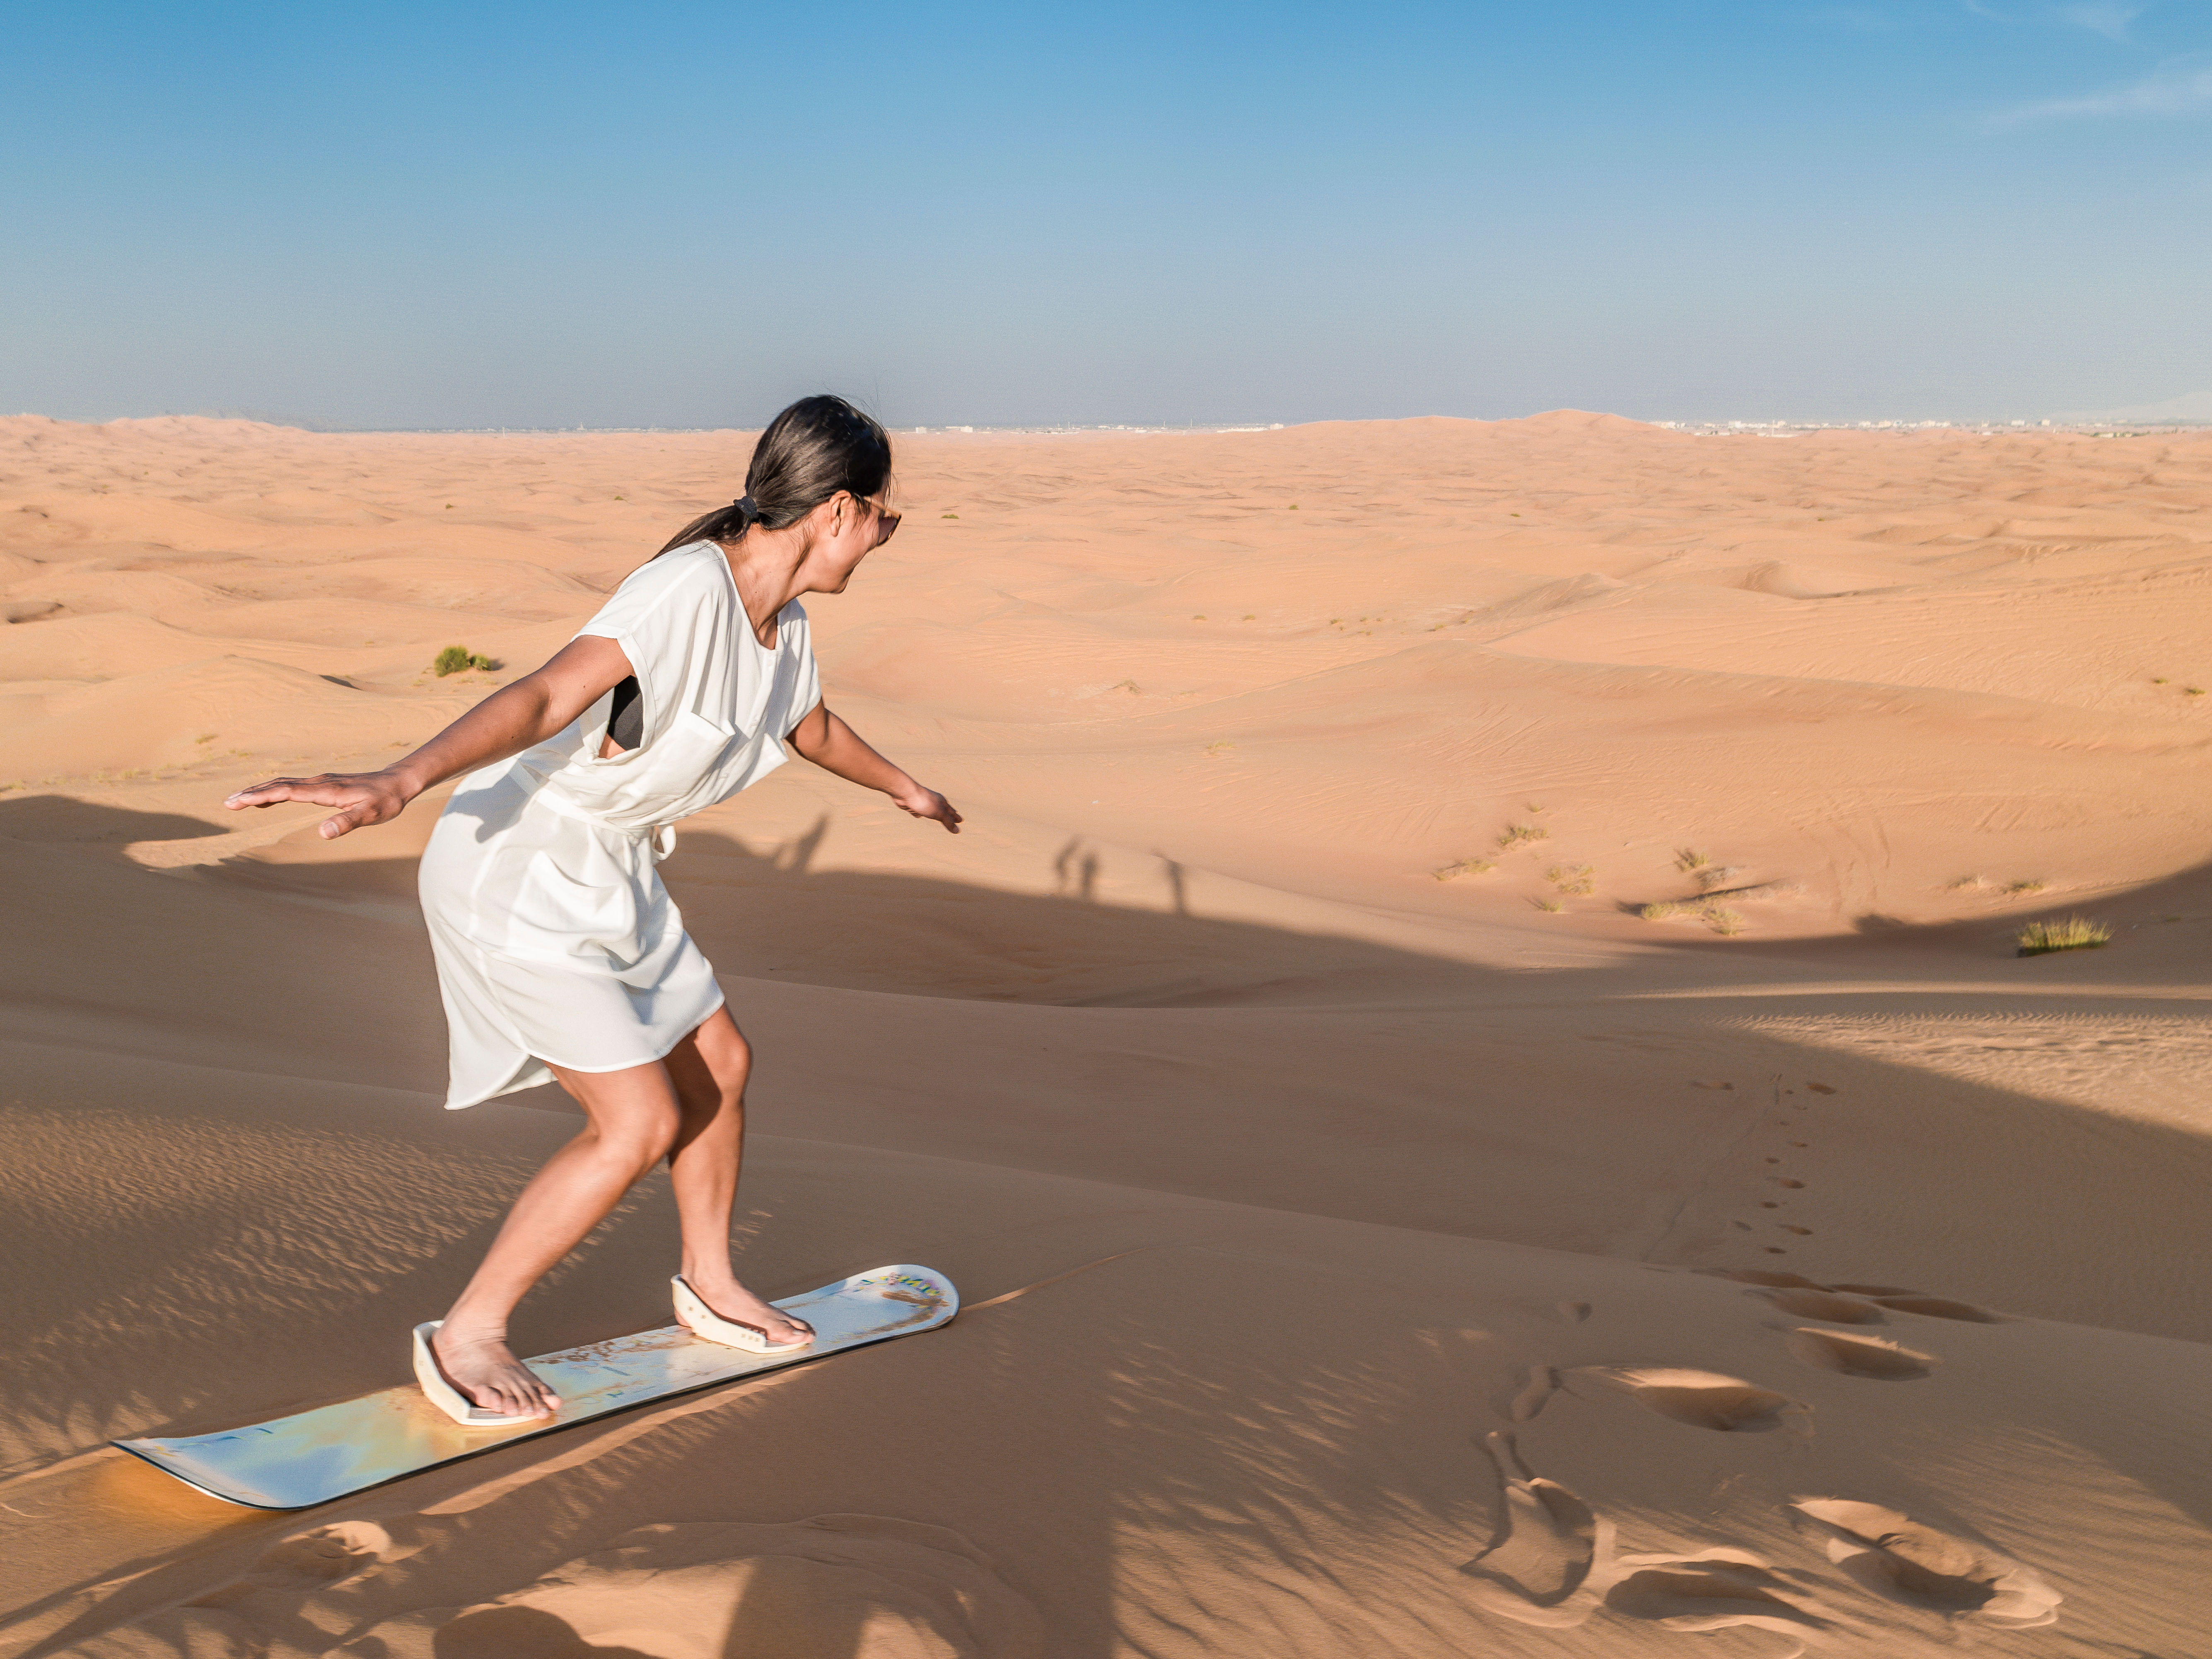 Feel a rush as you fly down the dunes © fokke baarssen / Shutterstock